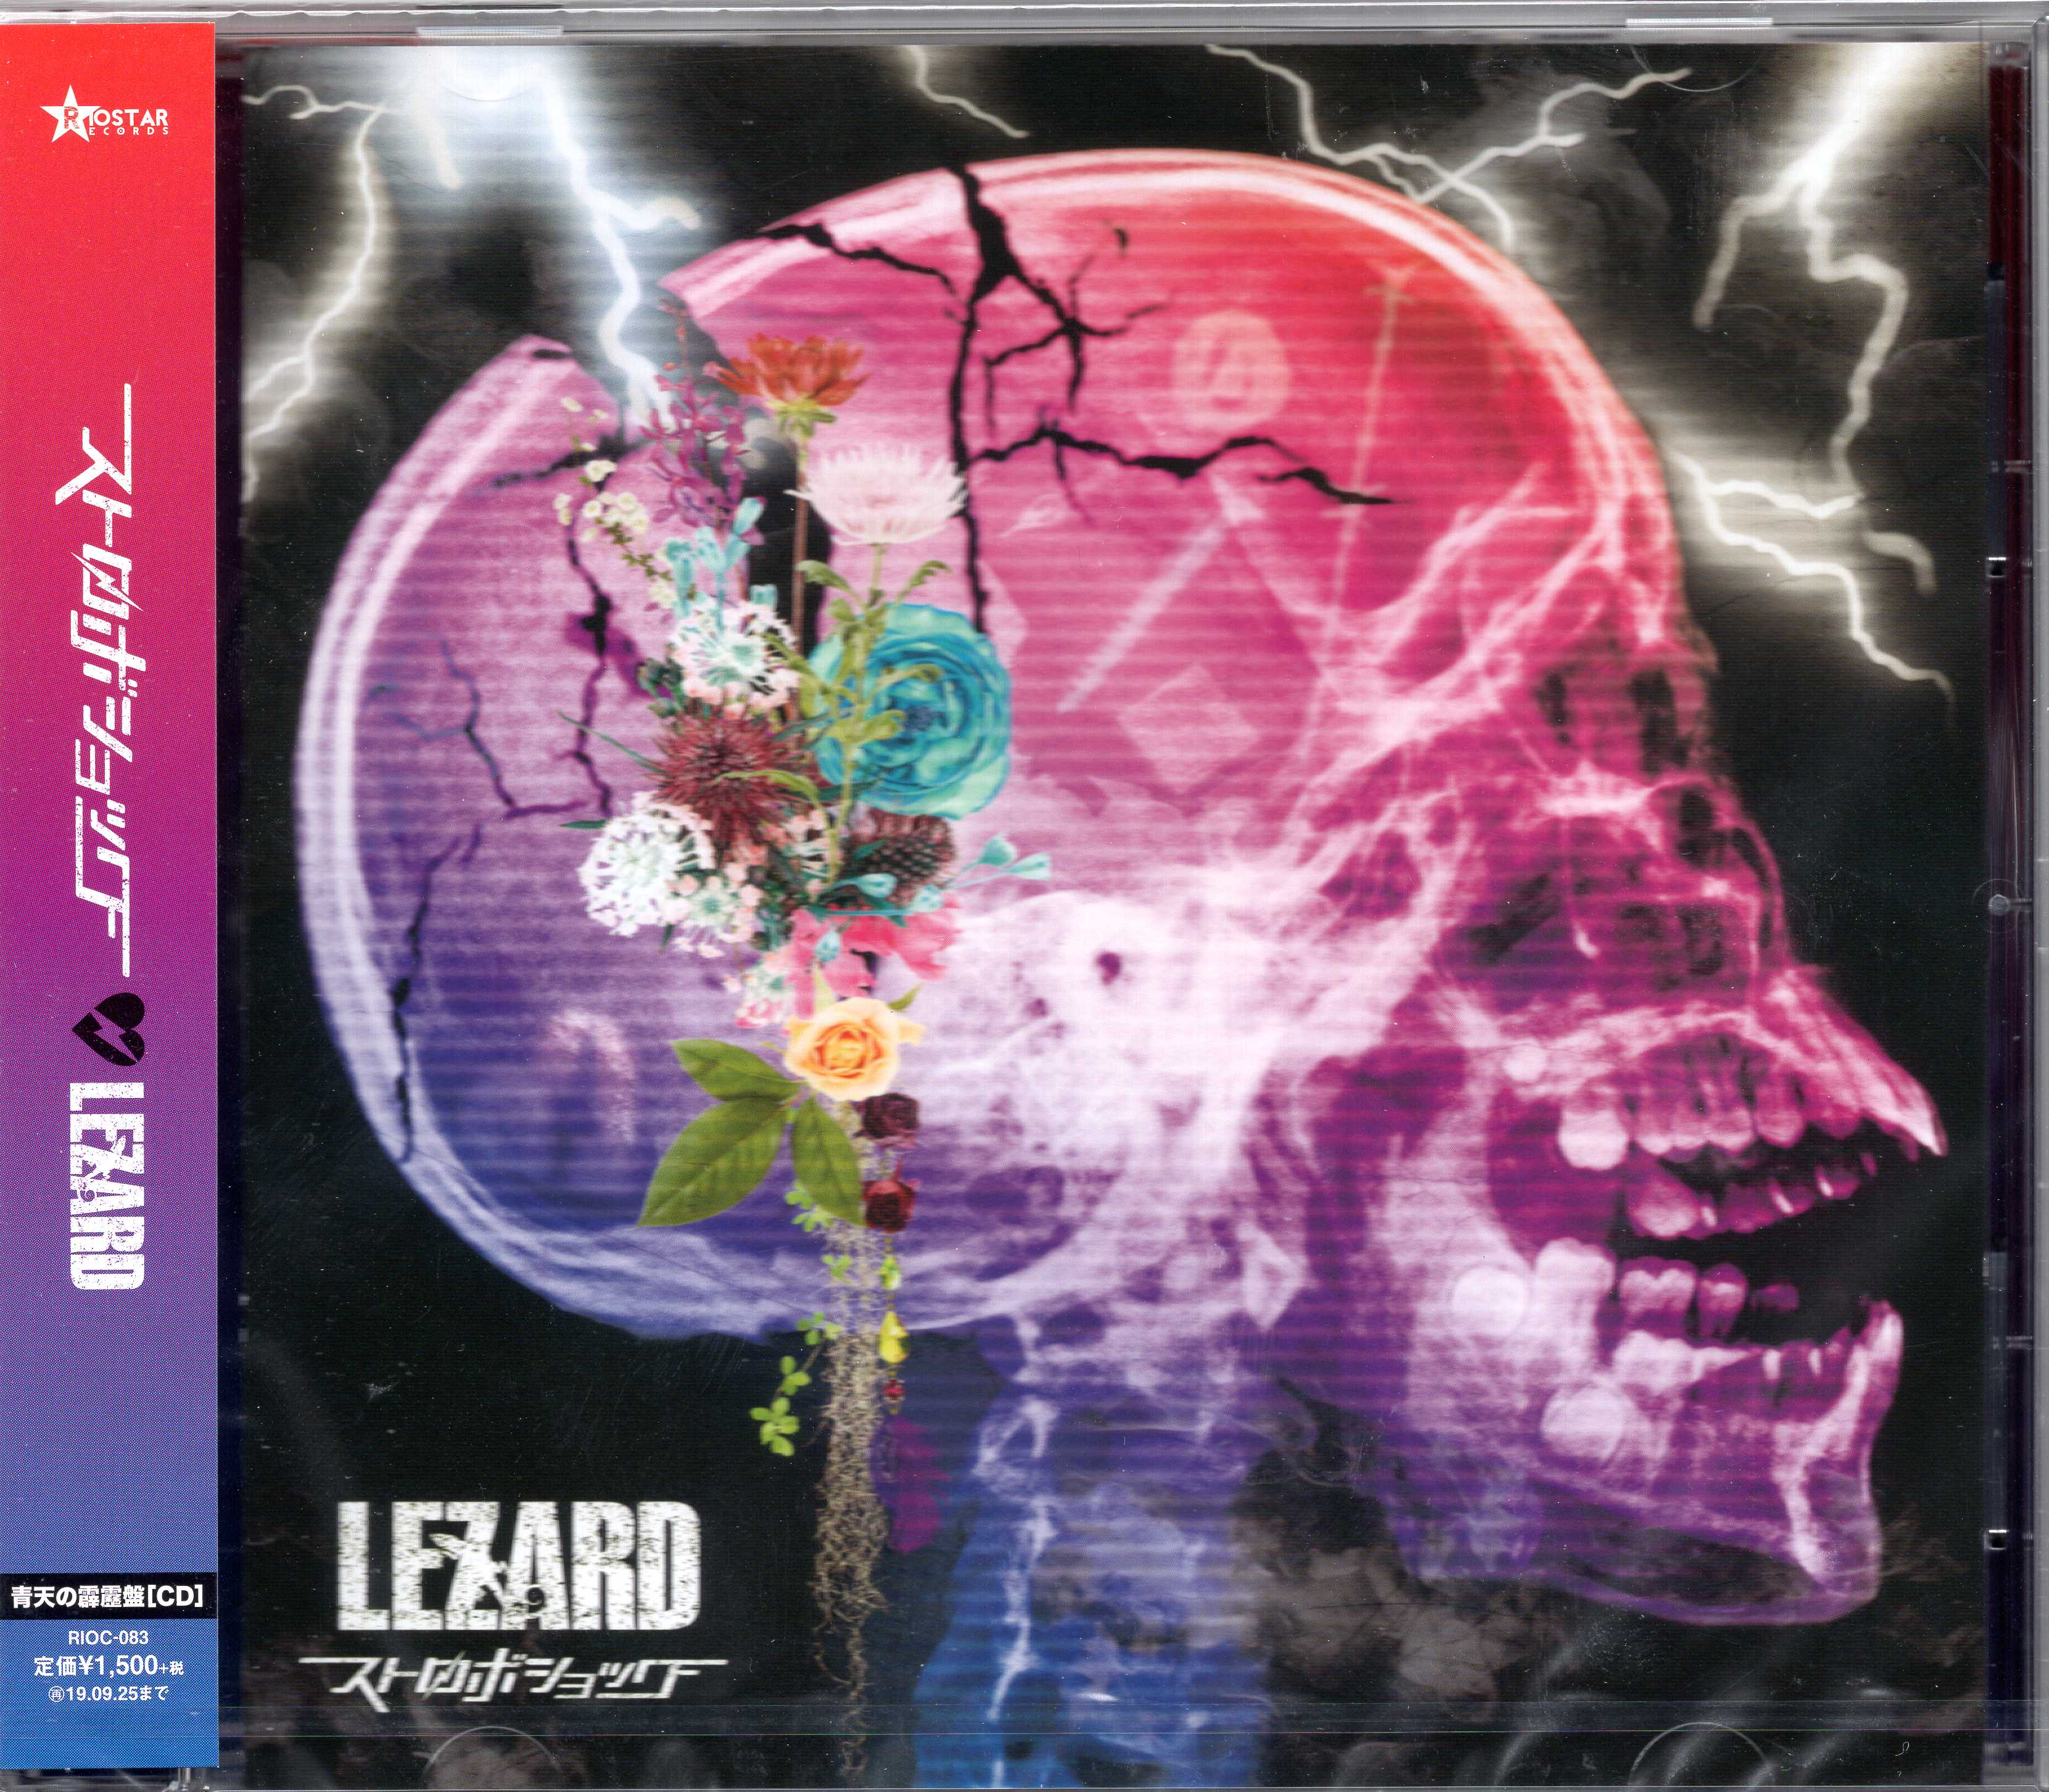 LEZARD ( リザード )  の CD 【青天の霹靂盤】ストロボショック